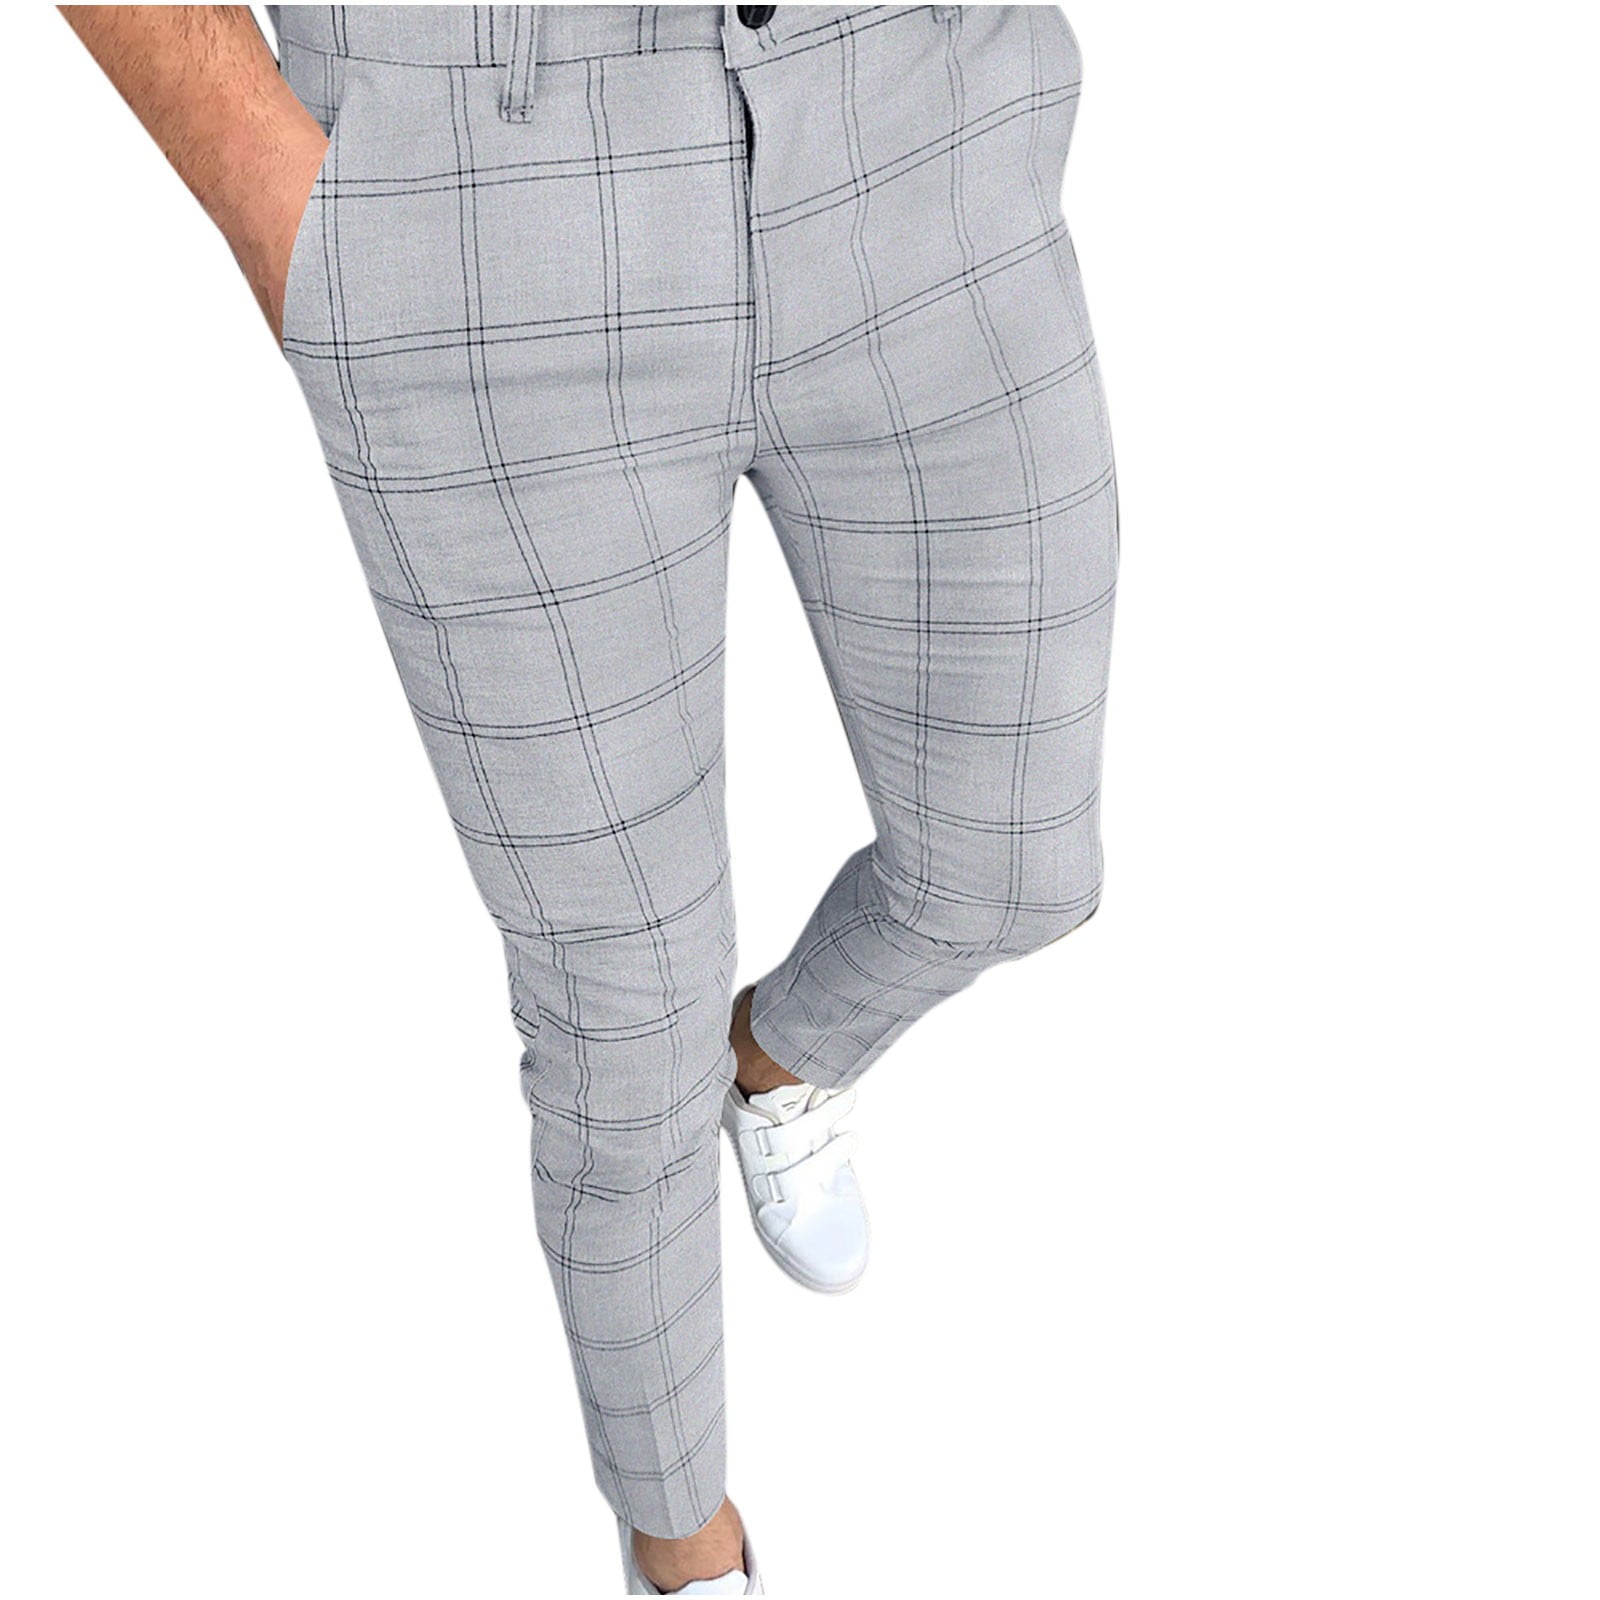 Gray Udo Pencil Fit Formal Pants, Size: 30 32 34 36 38 at Rs 555 in Mumbai